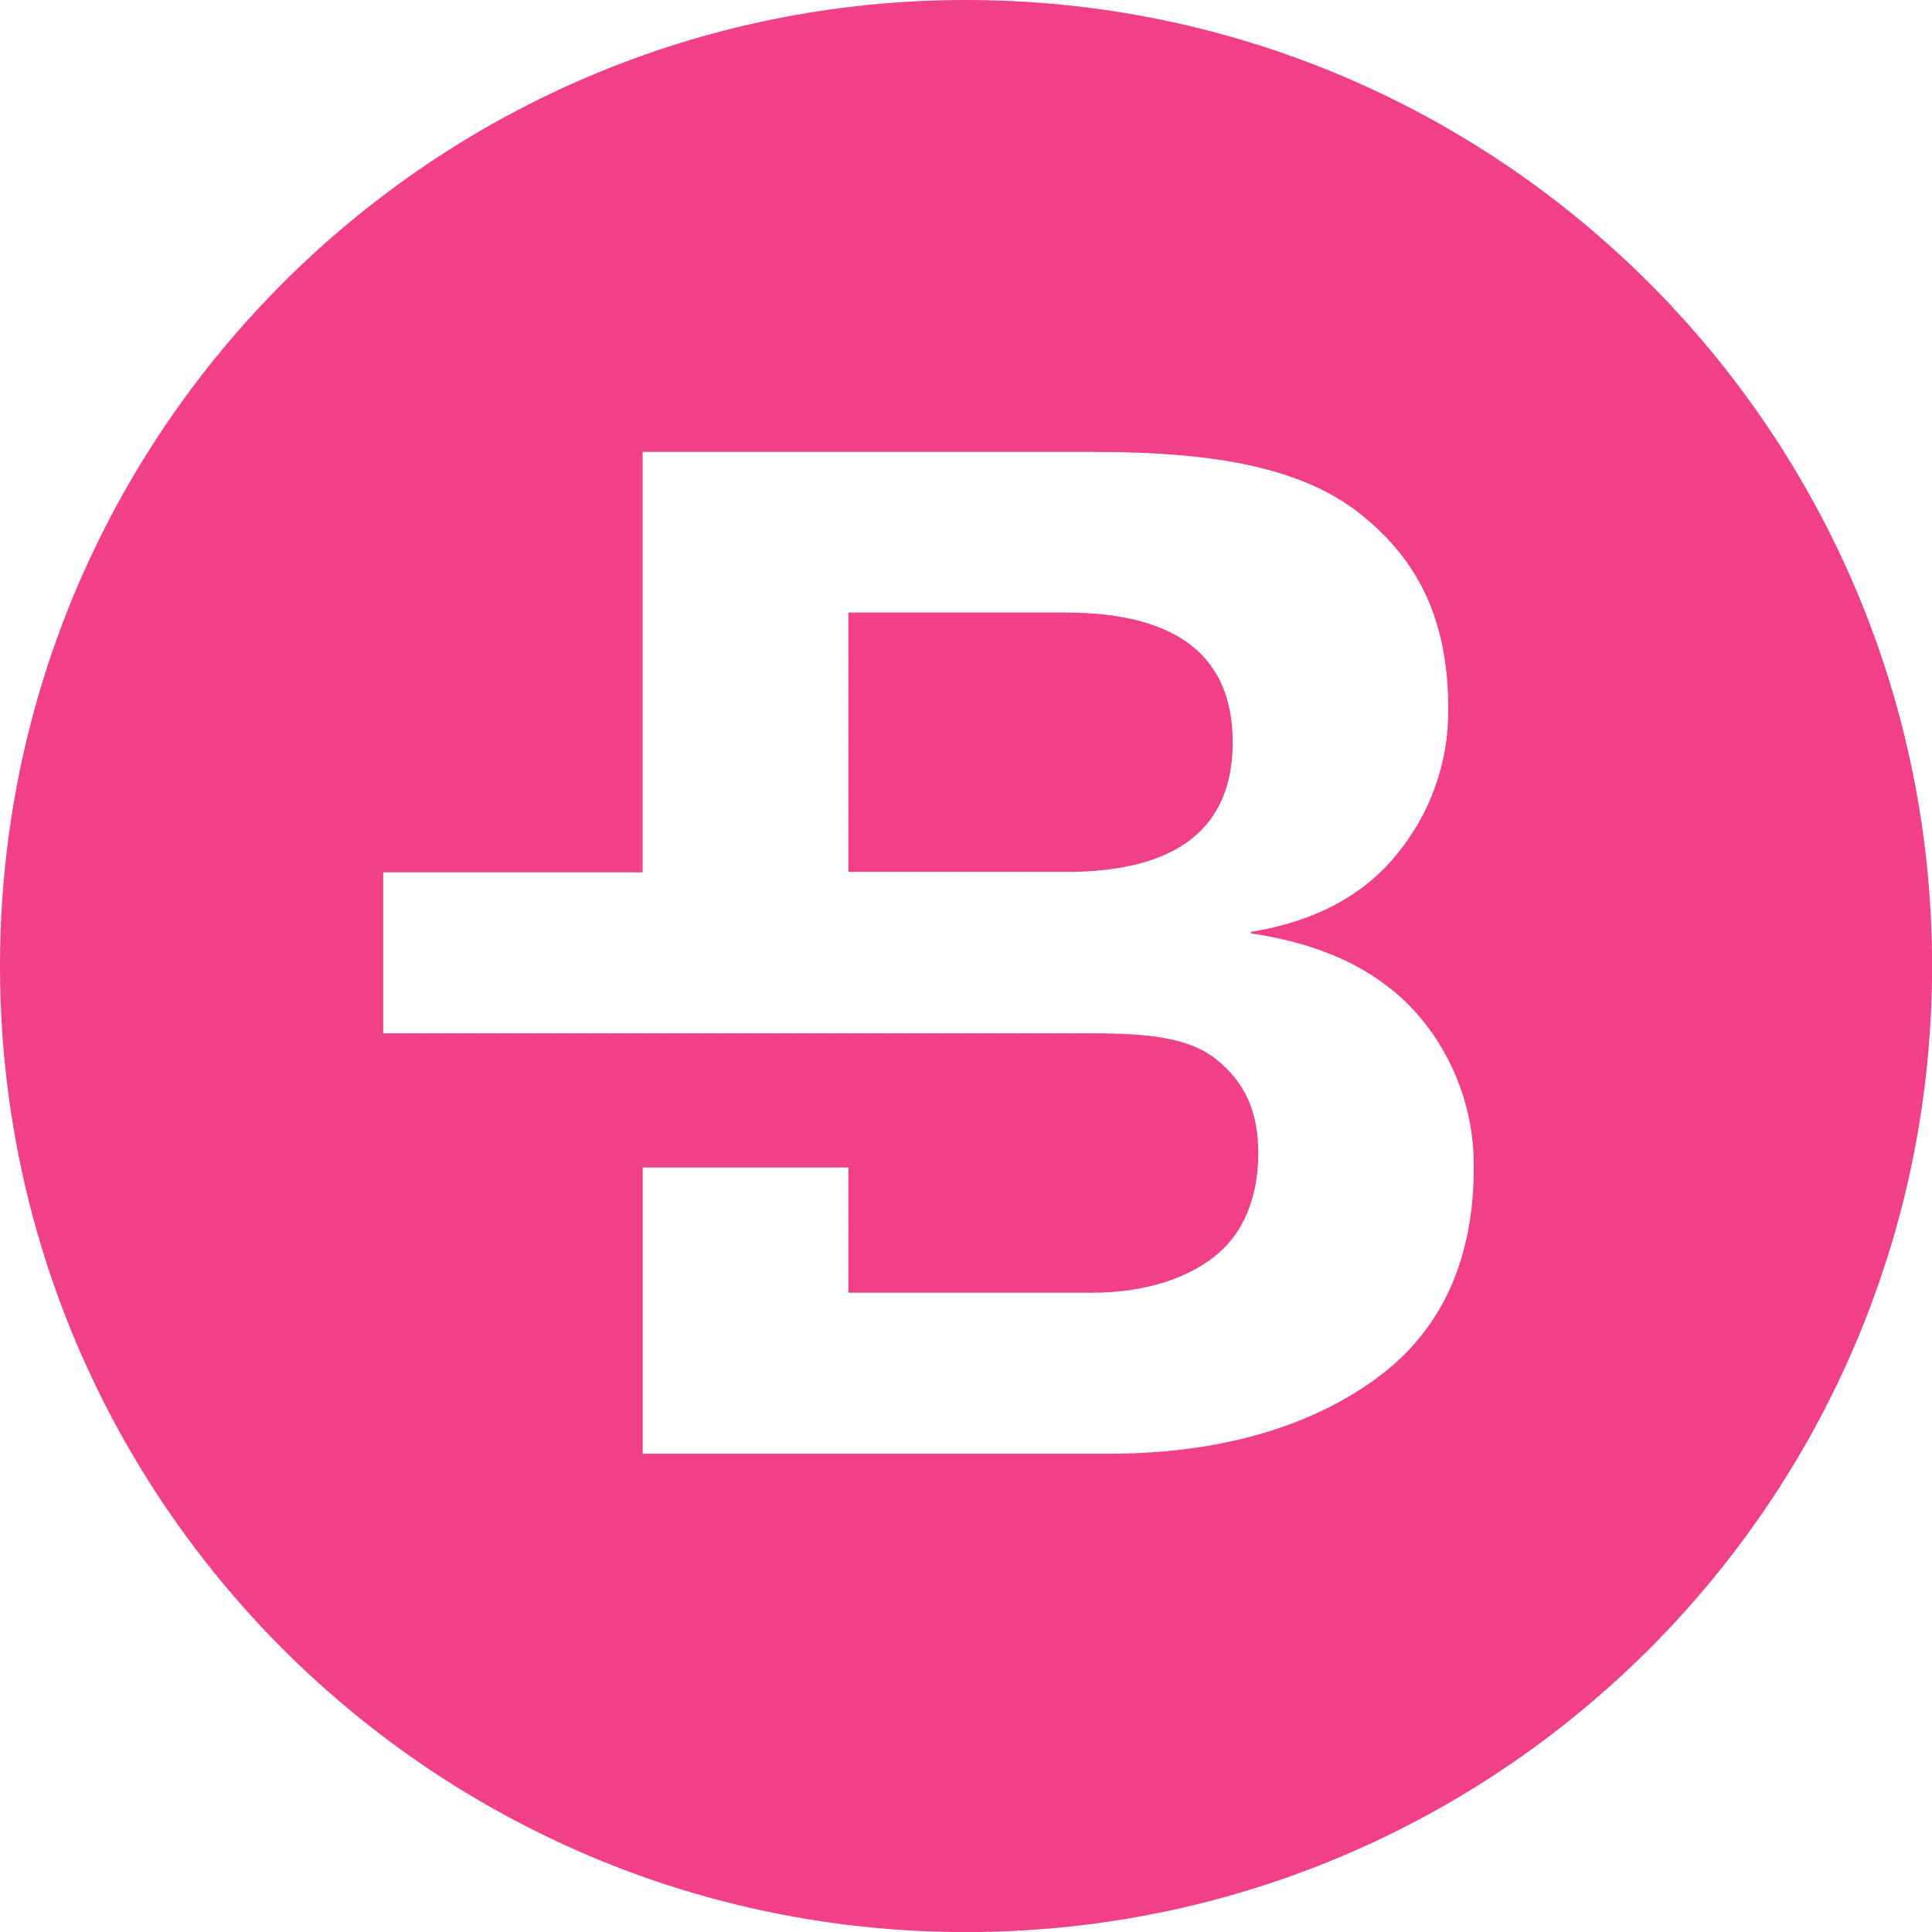 bytecoin logo